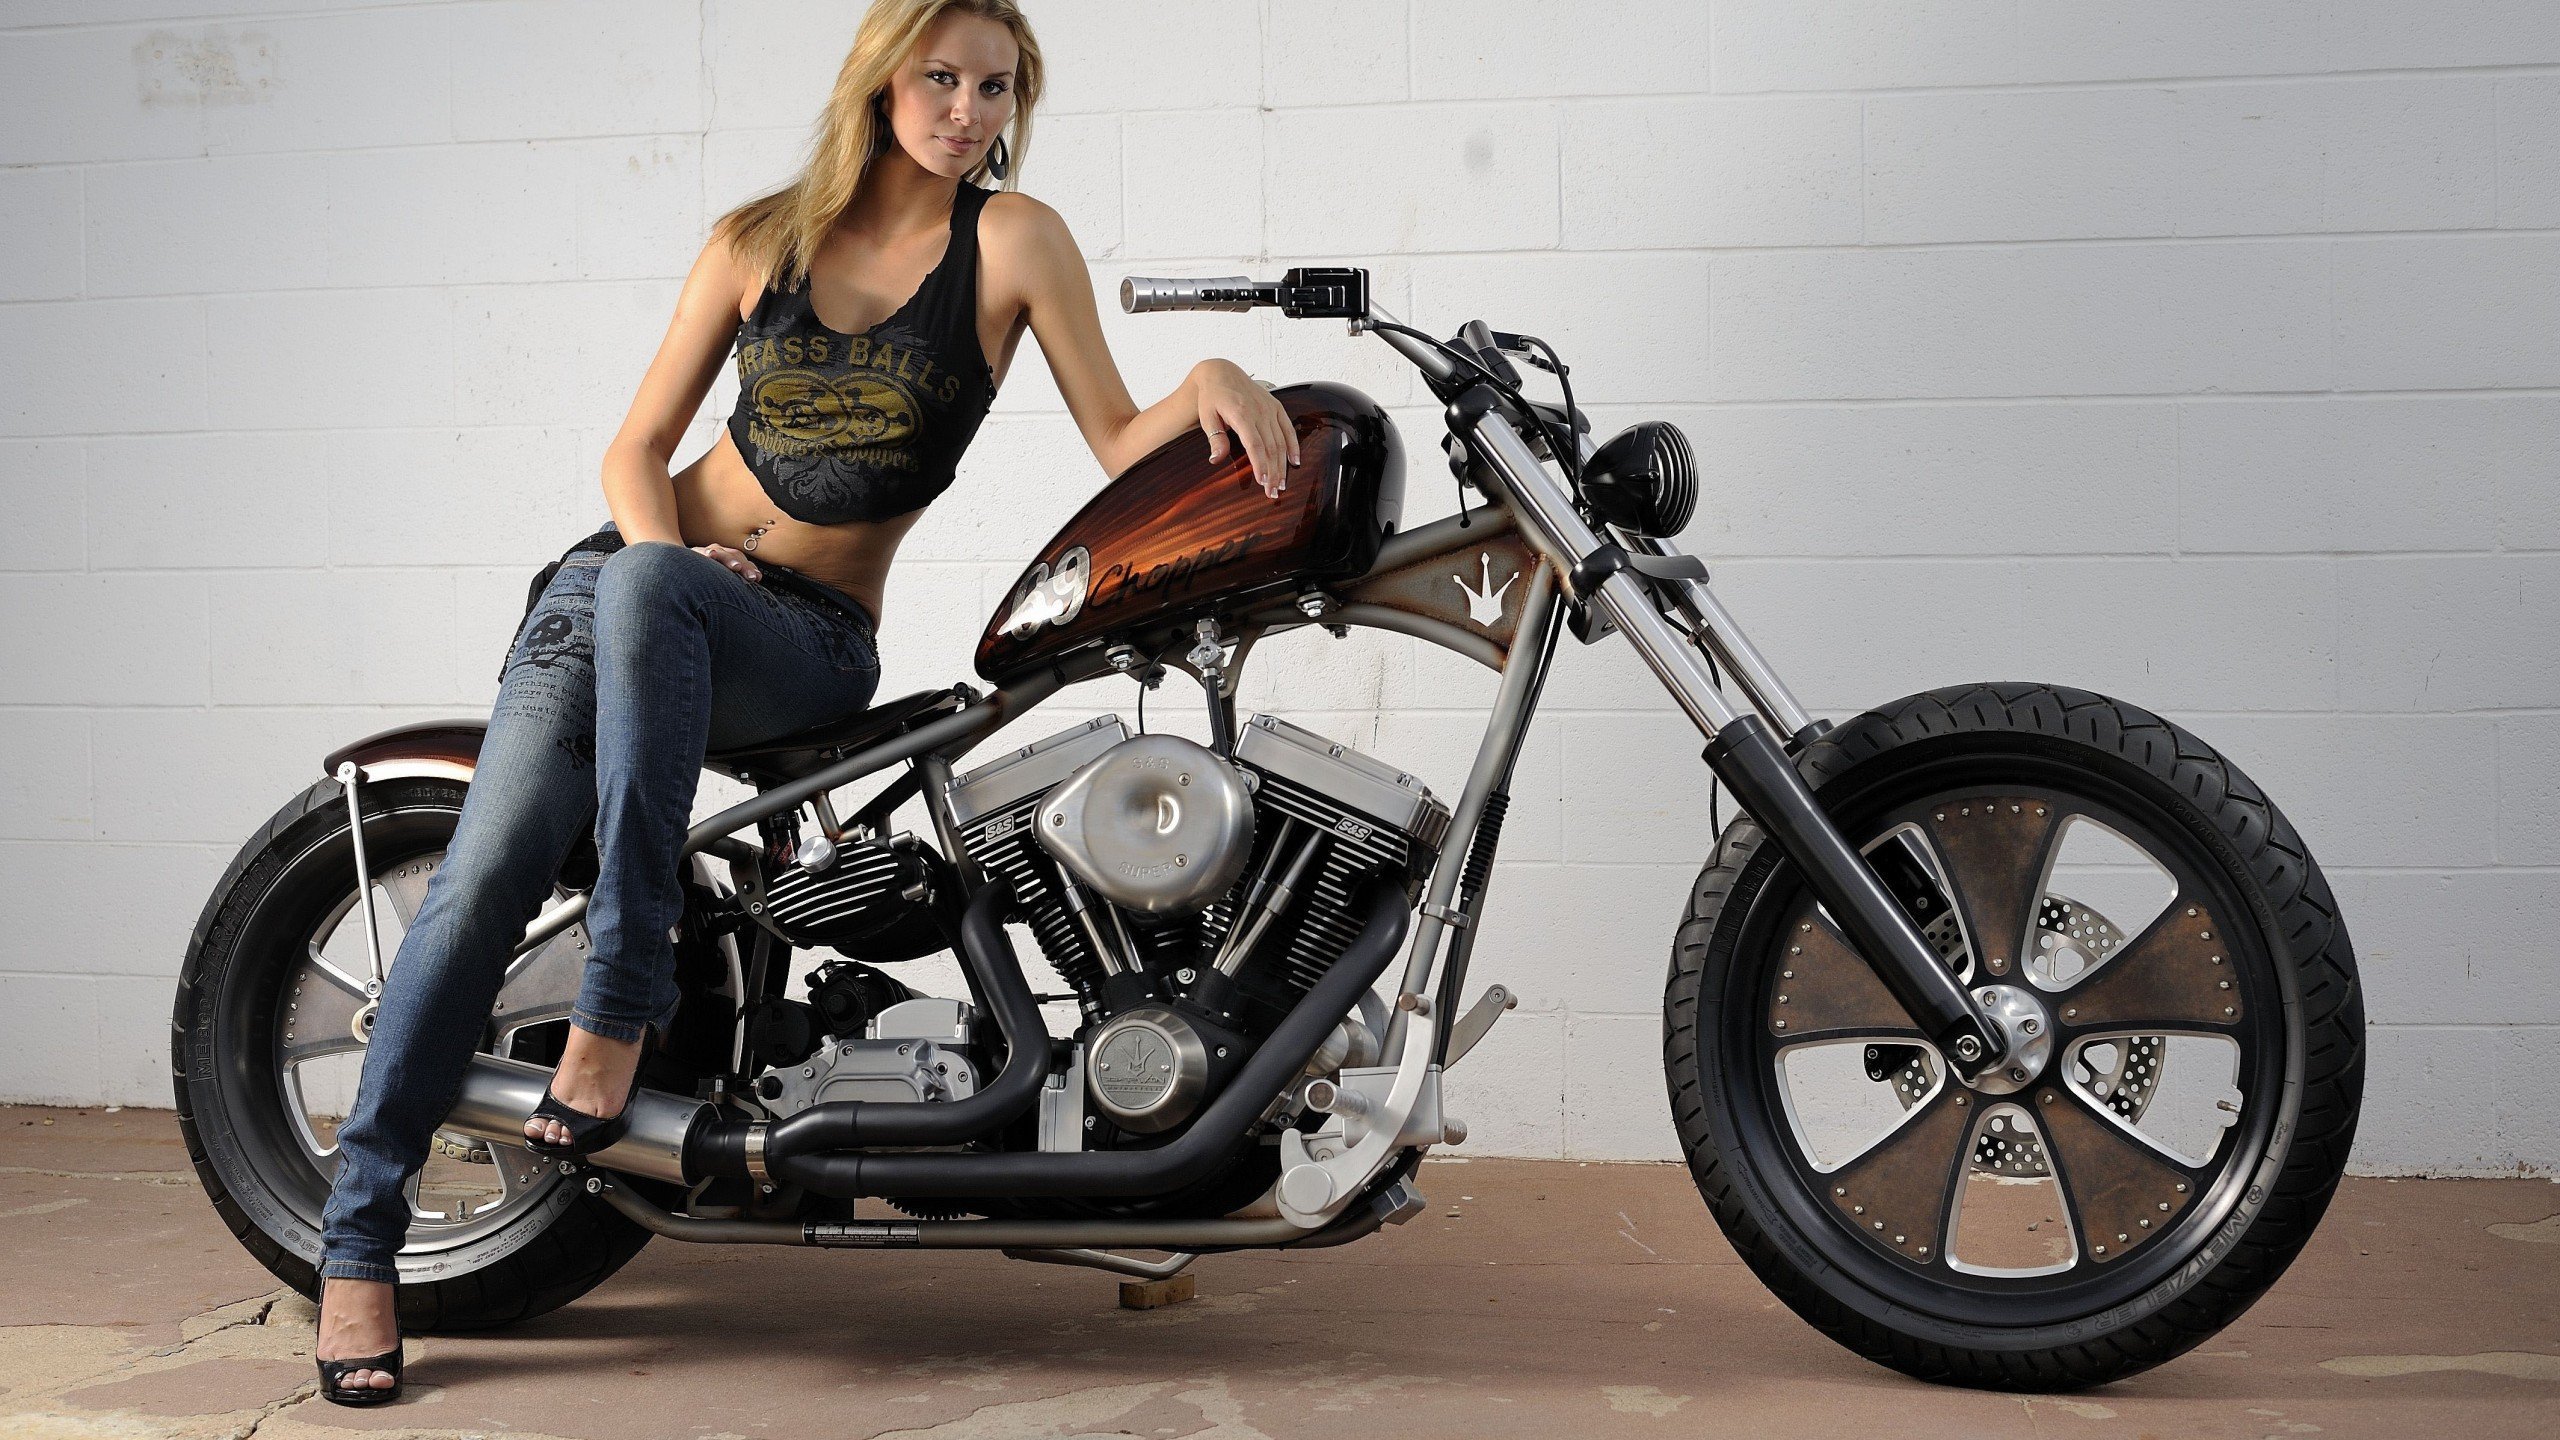 Chopper bike tuning motorbike motorcycle hot rod rods custom wallpaper 2560x1440